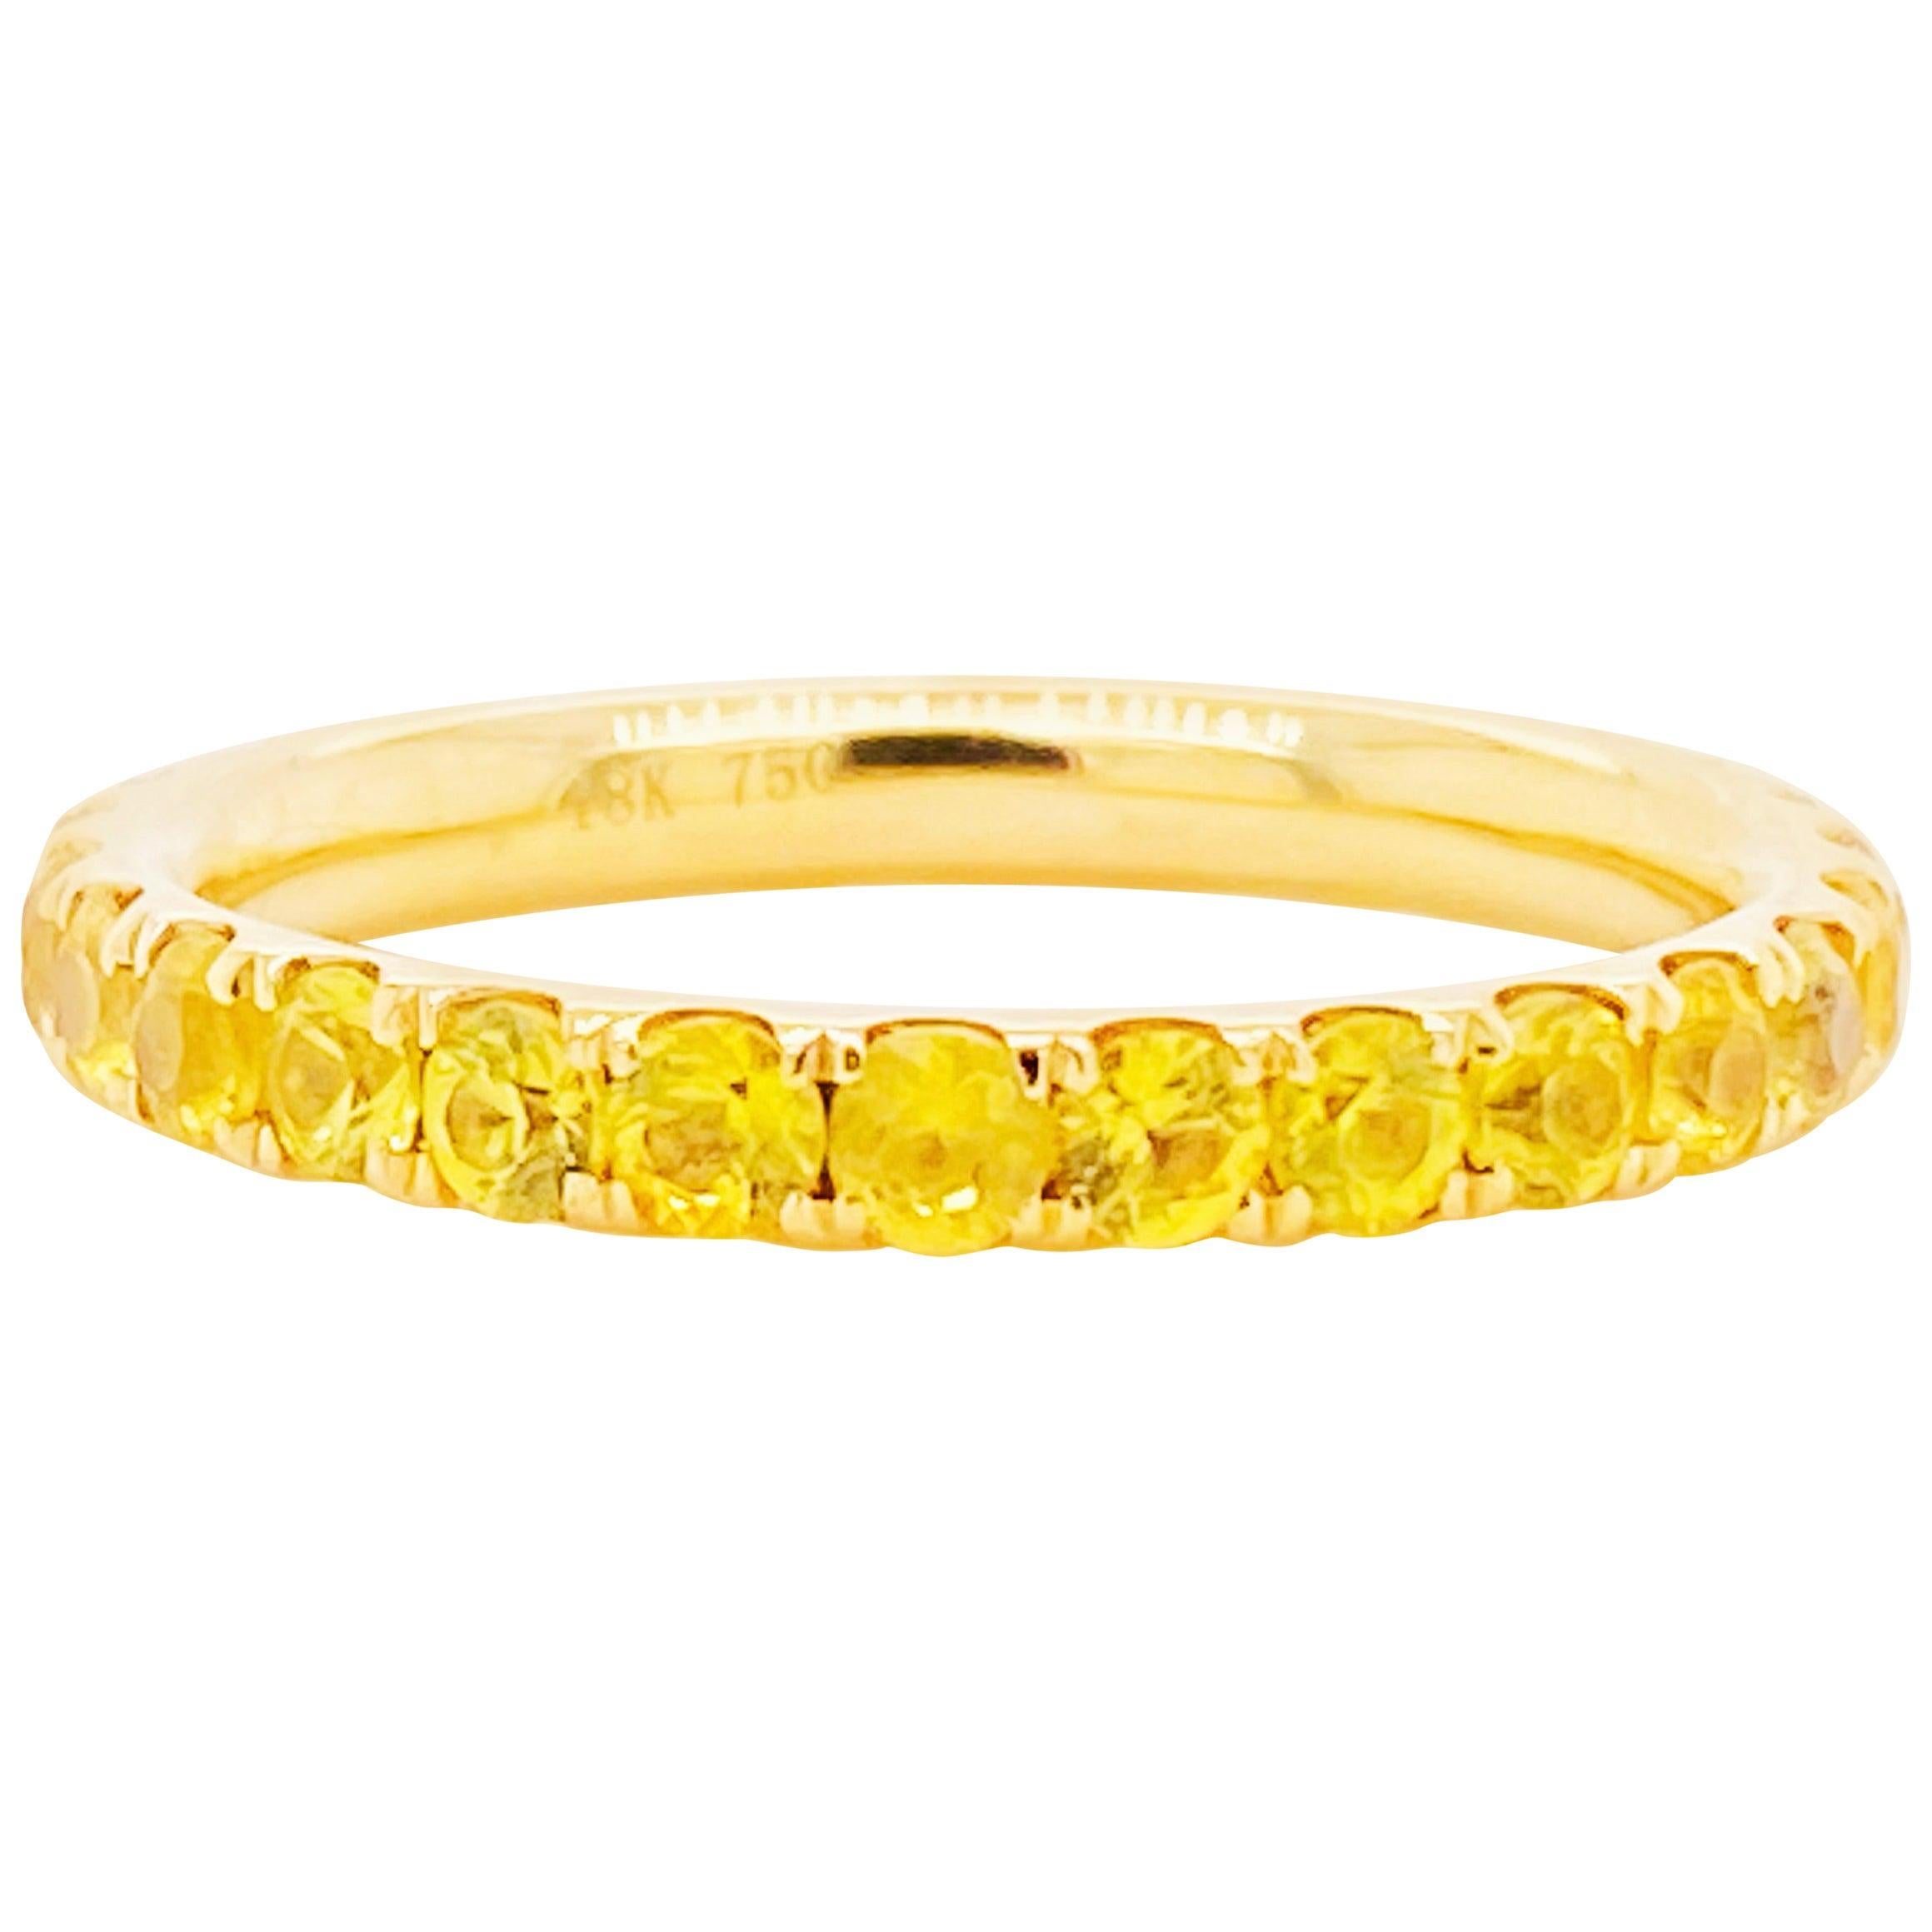 Yellow Sapphire Ring Eternity Band, 18 Karat Gold 1.76 Carat Sapphire, Wedding